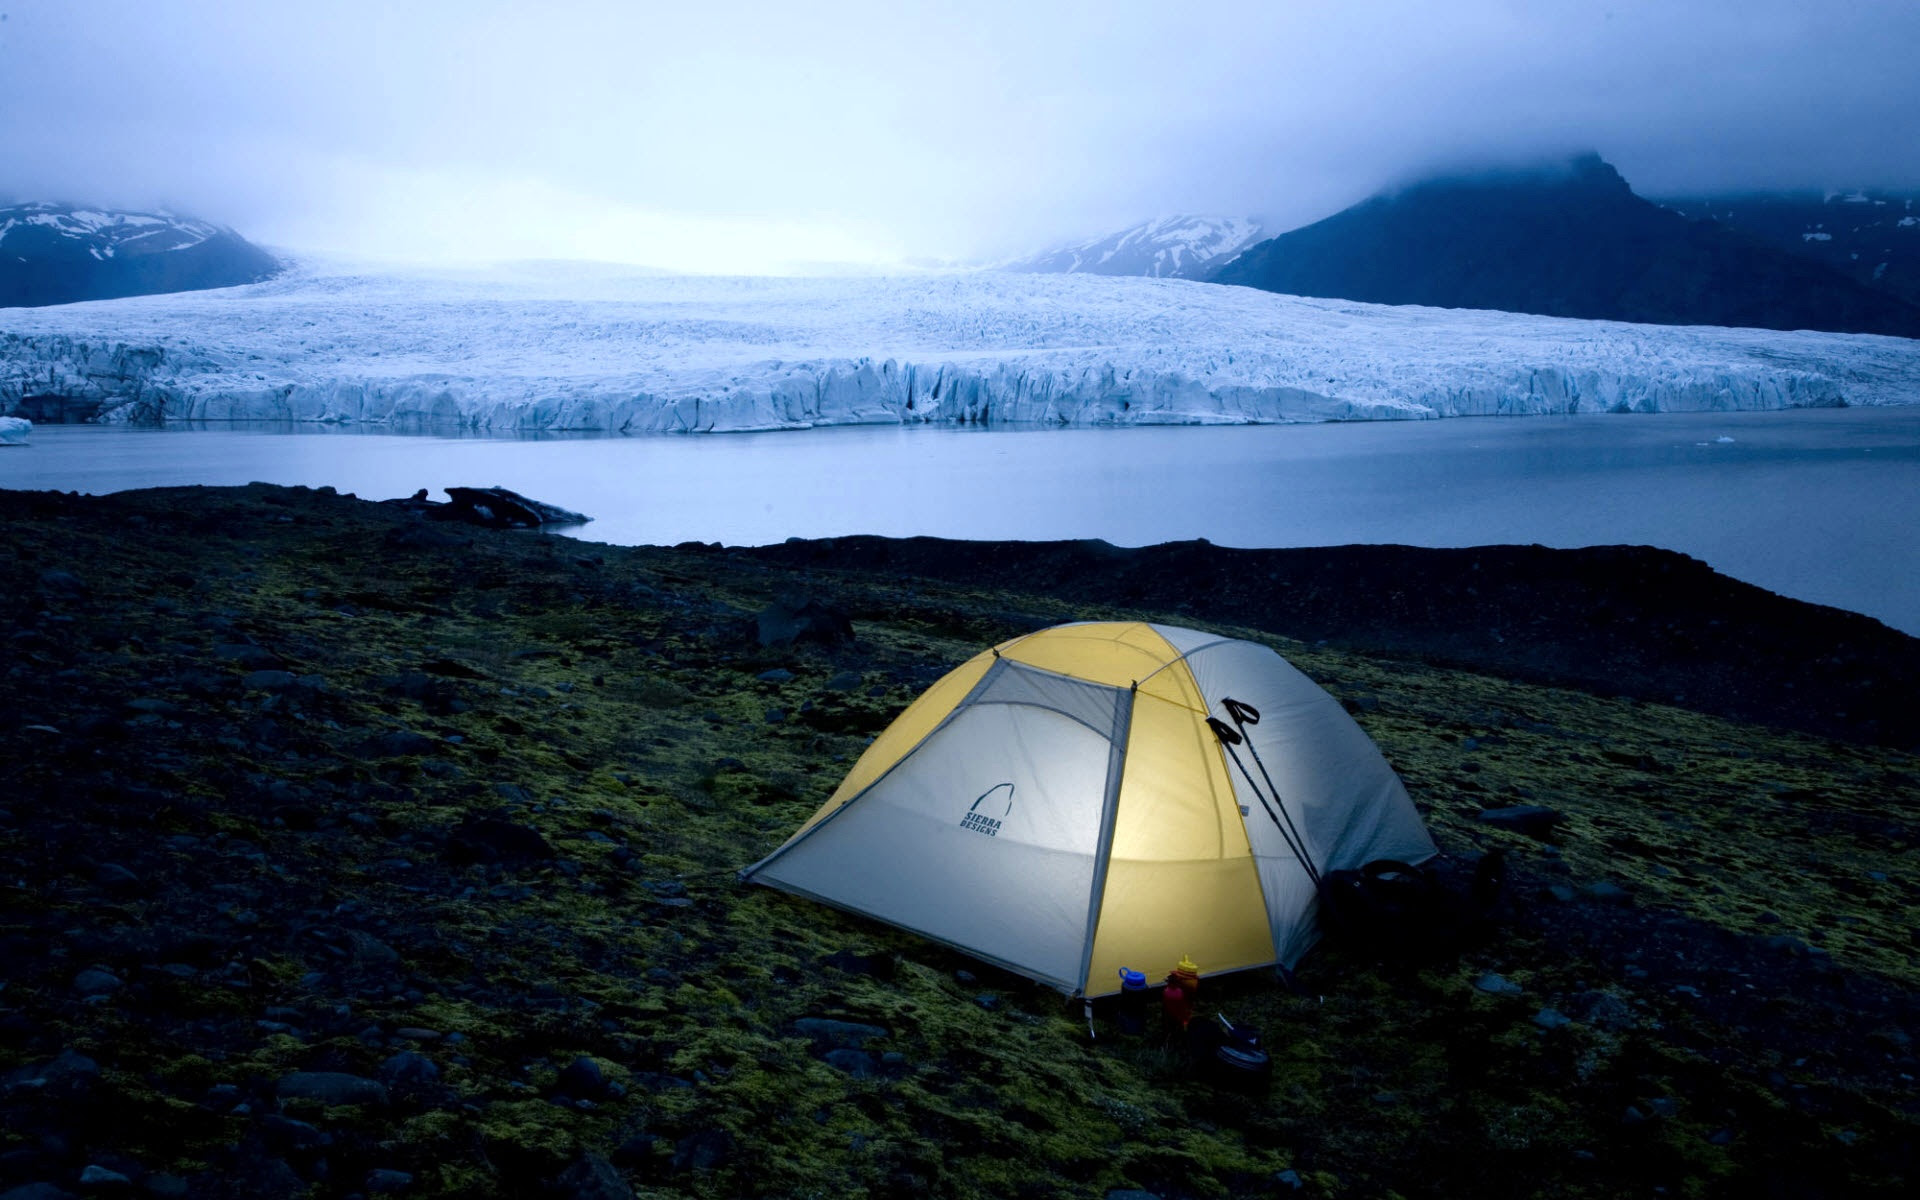 Camping Backgrounds Free Download | PixelsTalk.Net